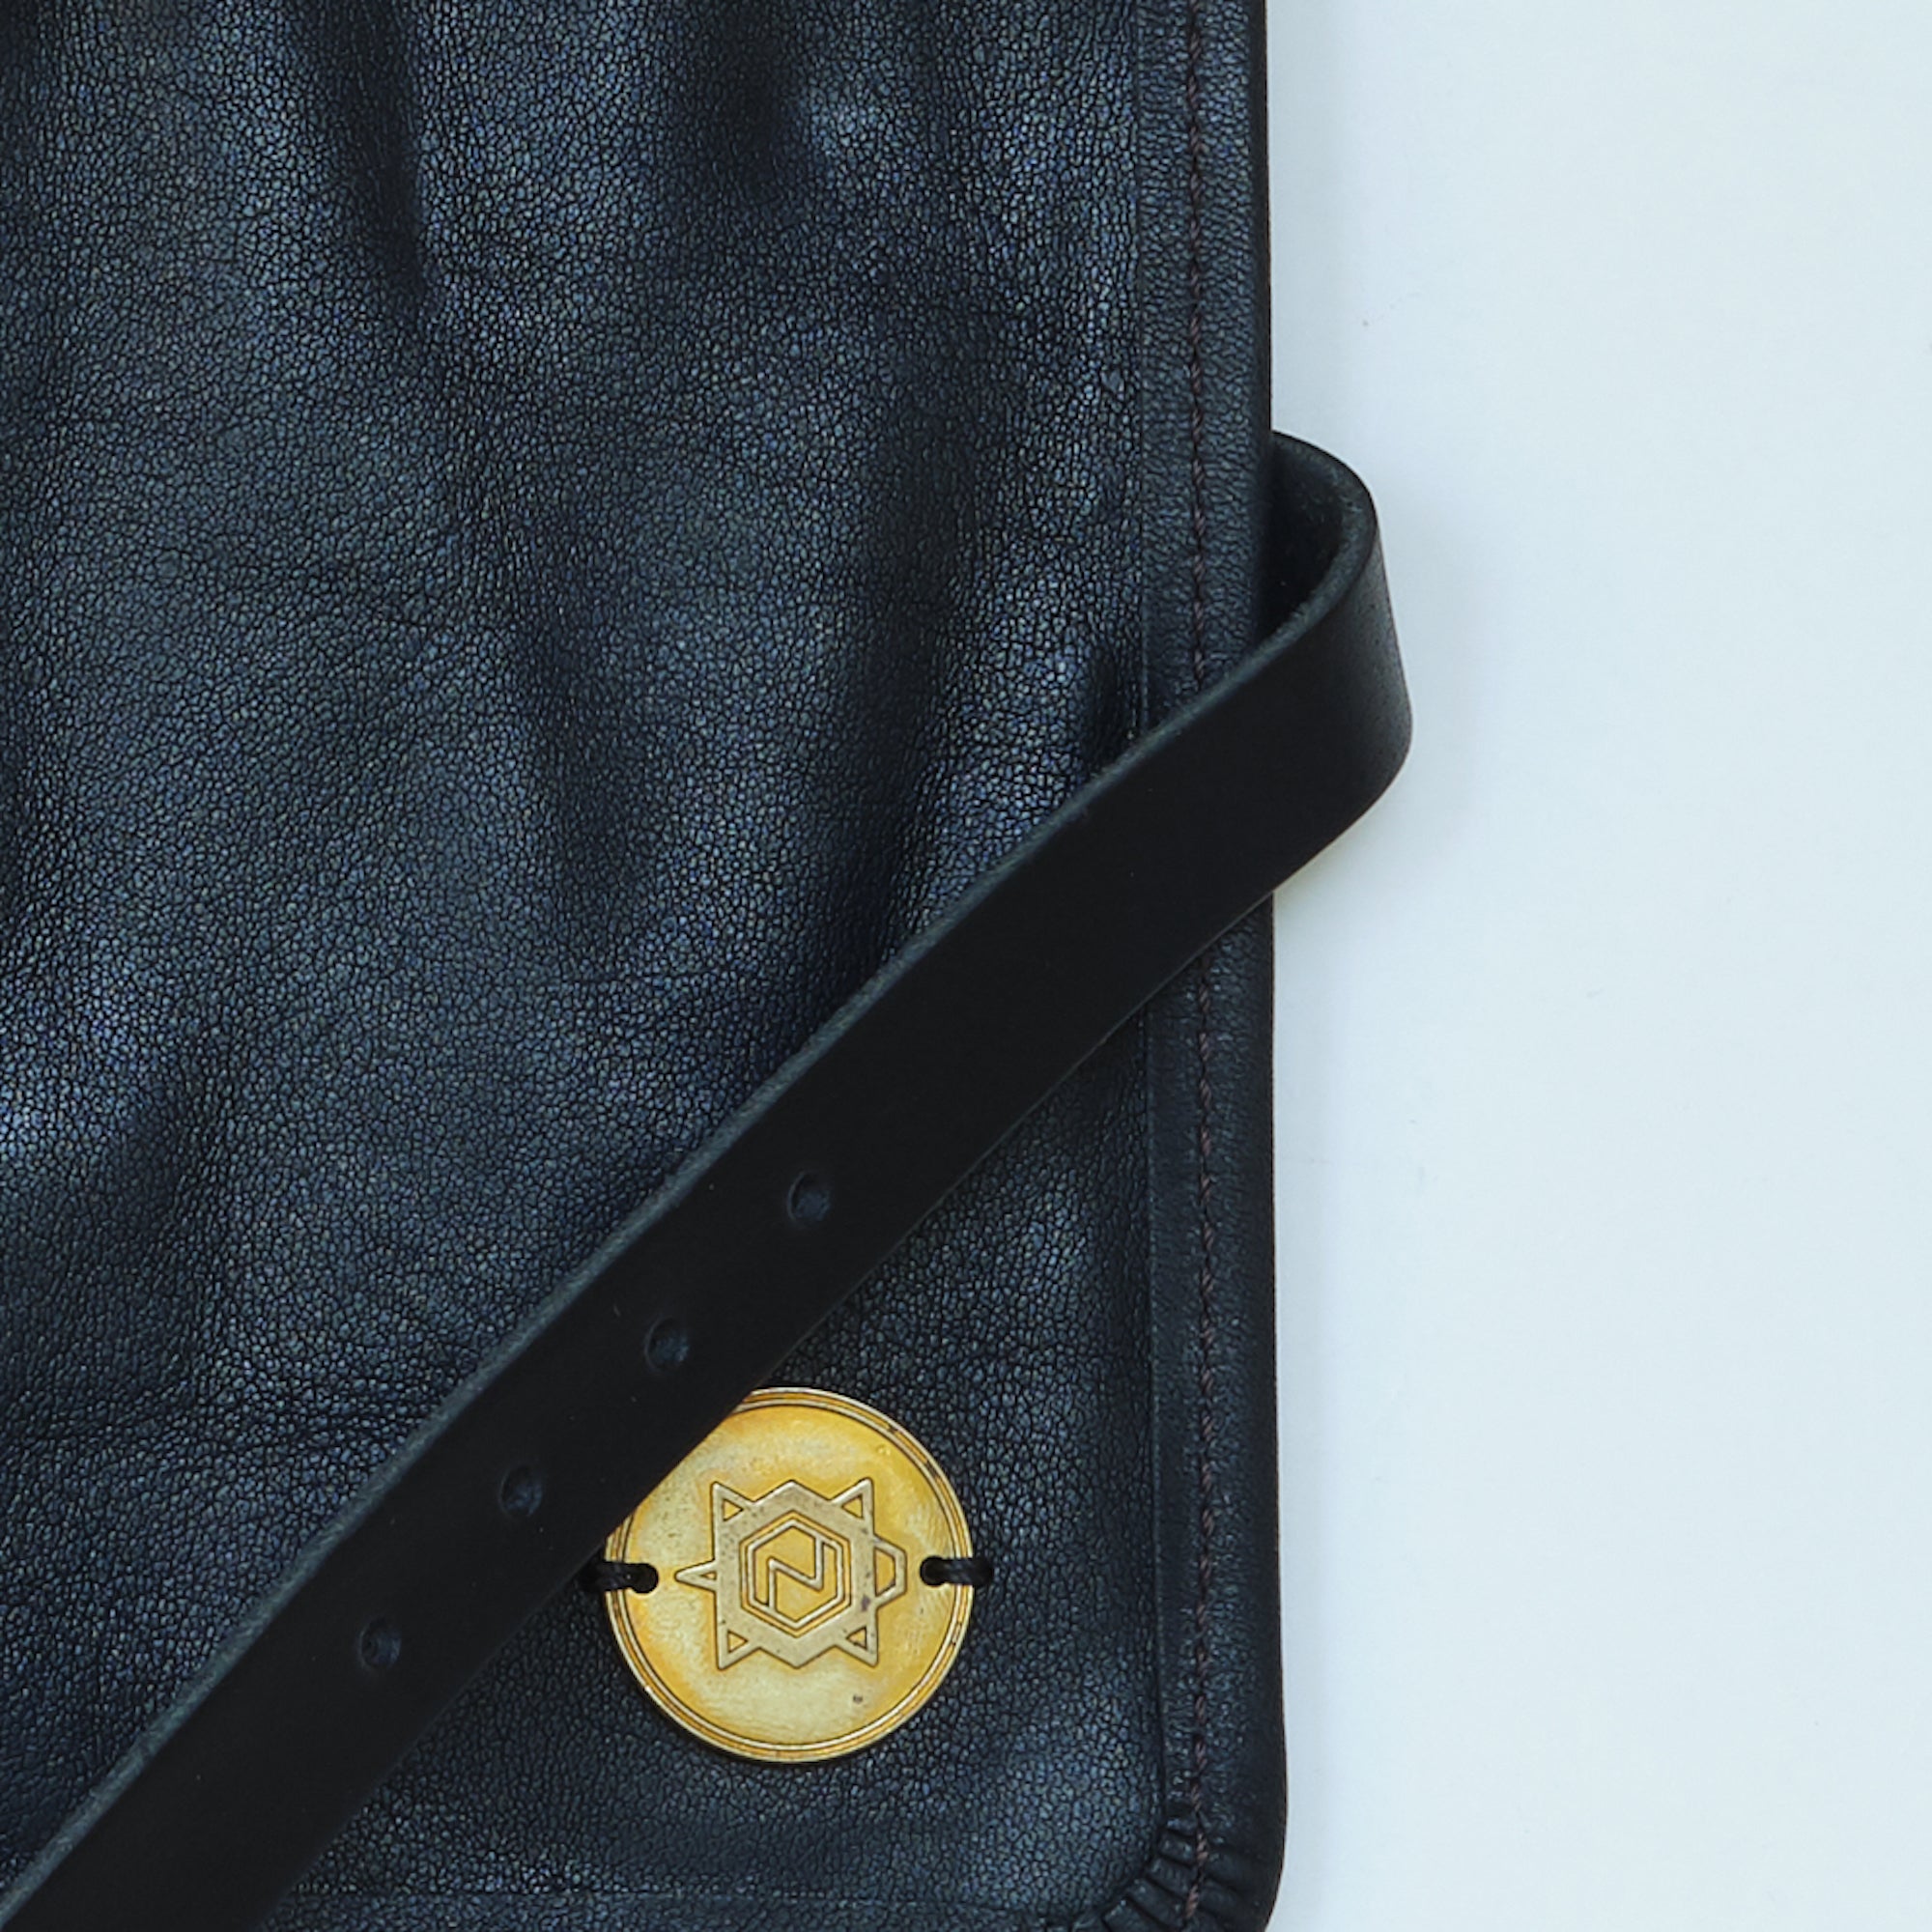 The Superior Labor Leather Zip Key Case (5 colours) - NOMADO Store